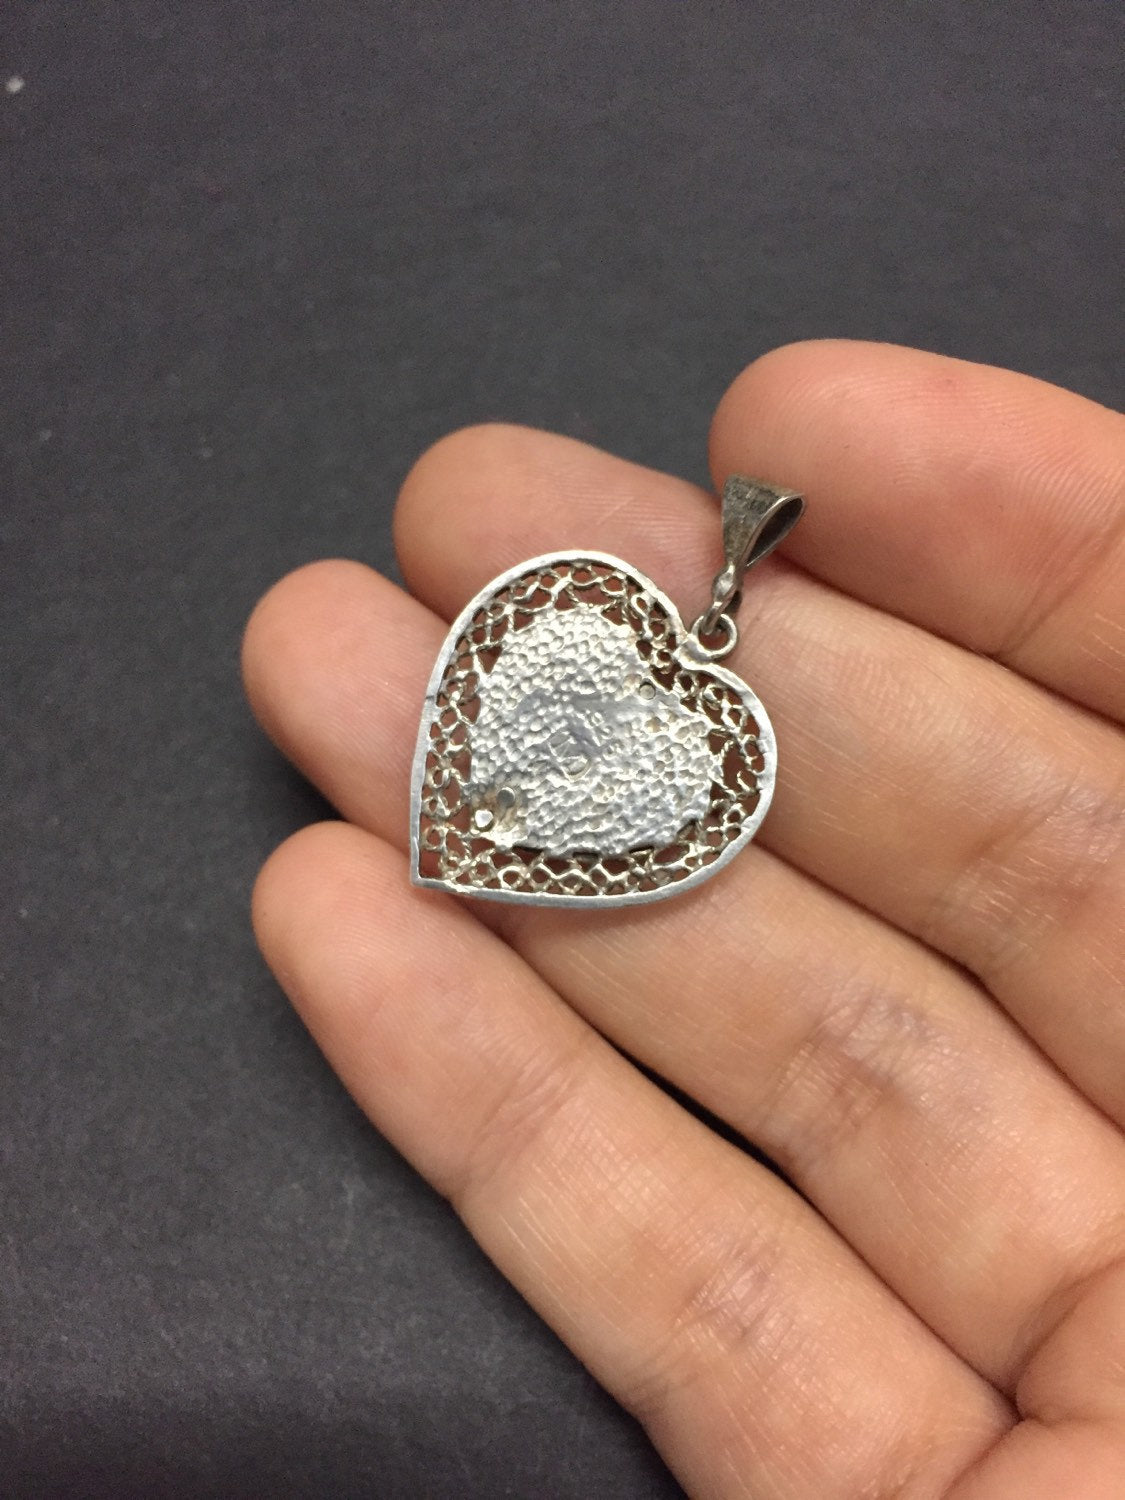 vintage sterling silver handmade pendant, 925 silver filigree heart pendant